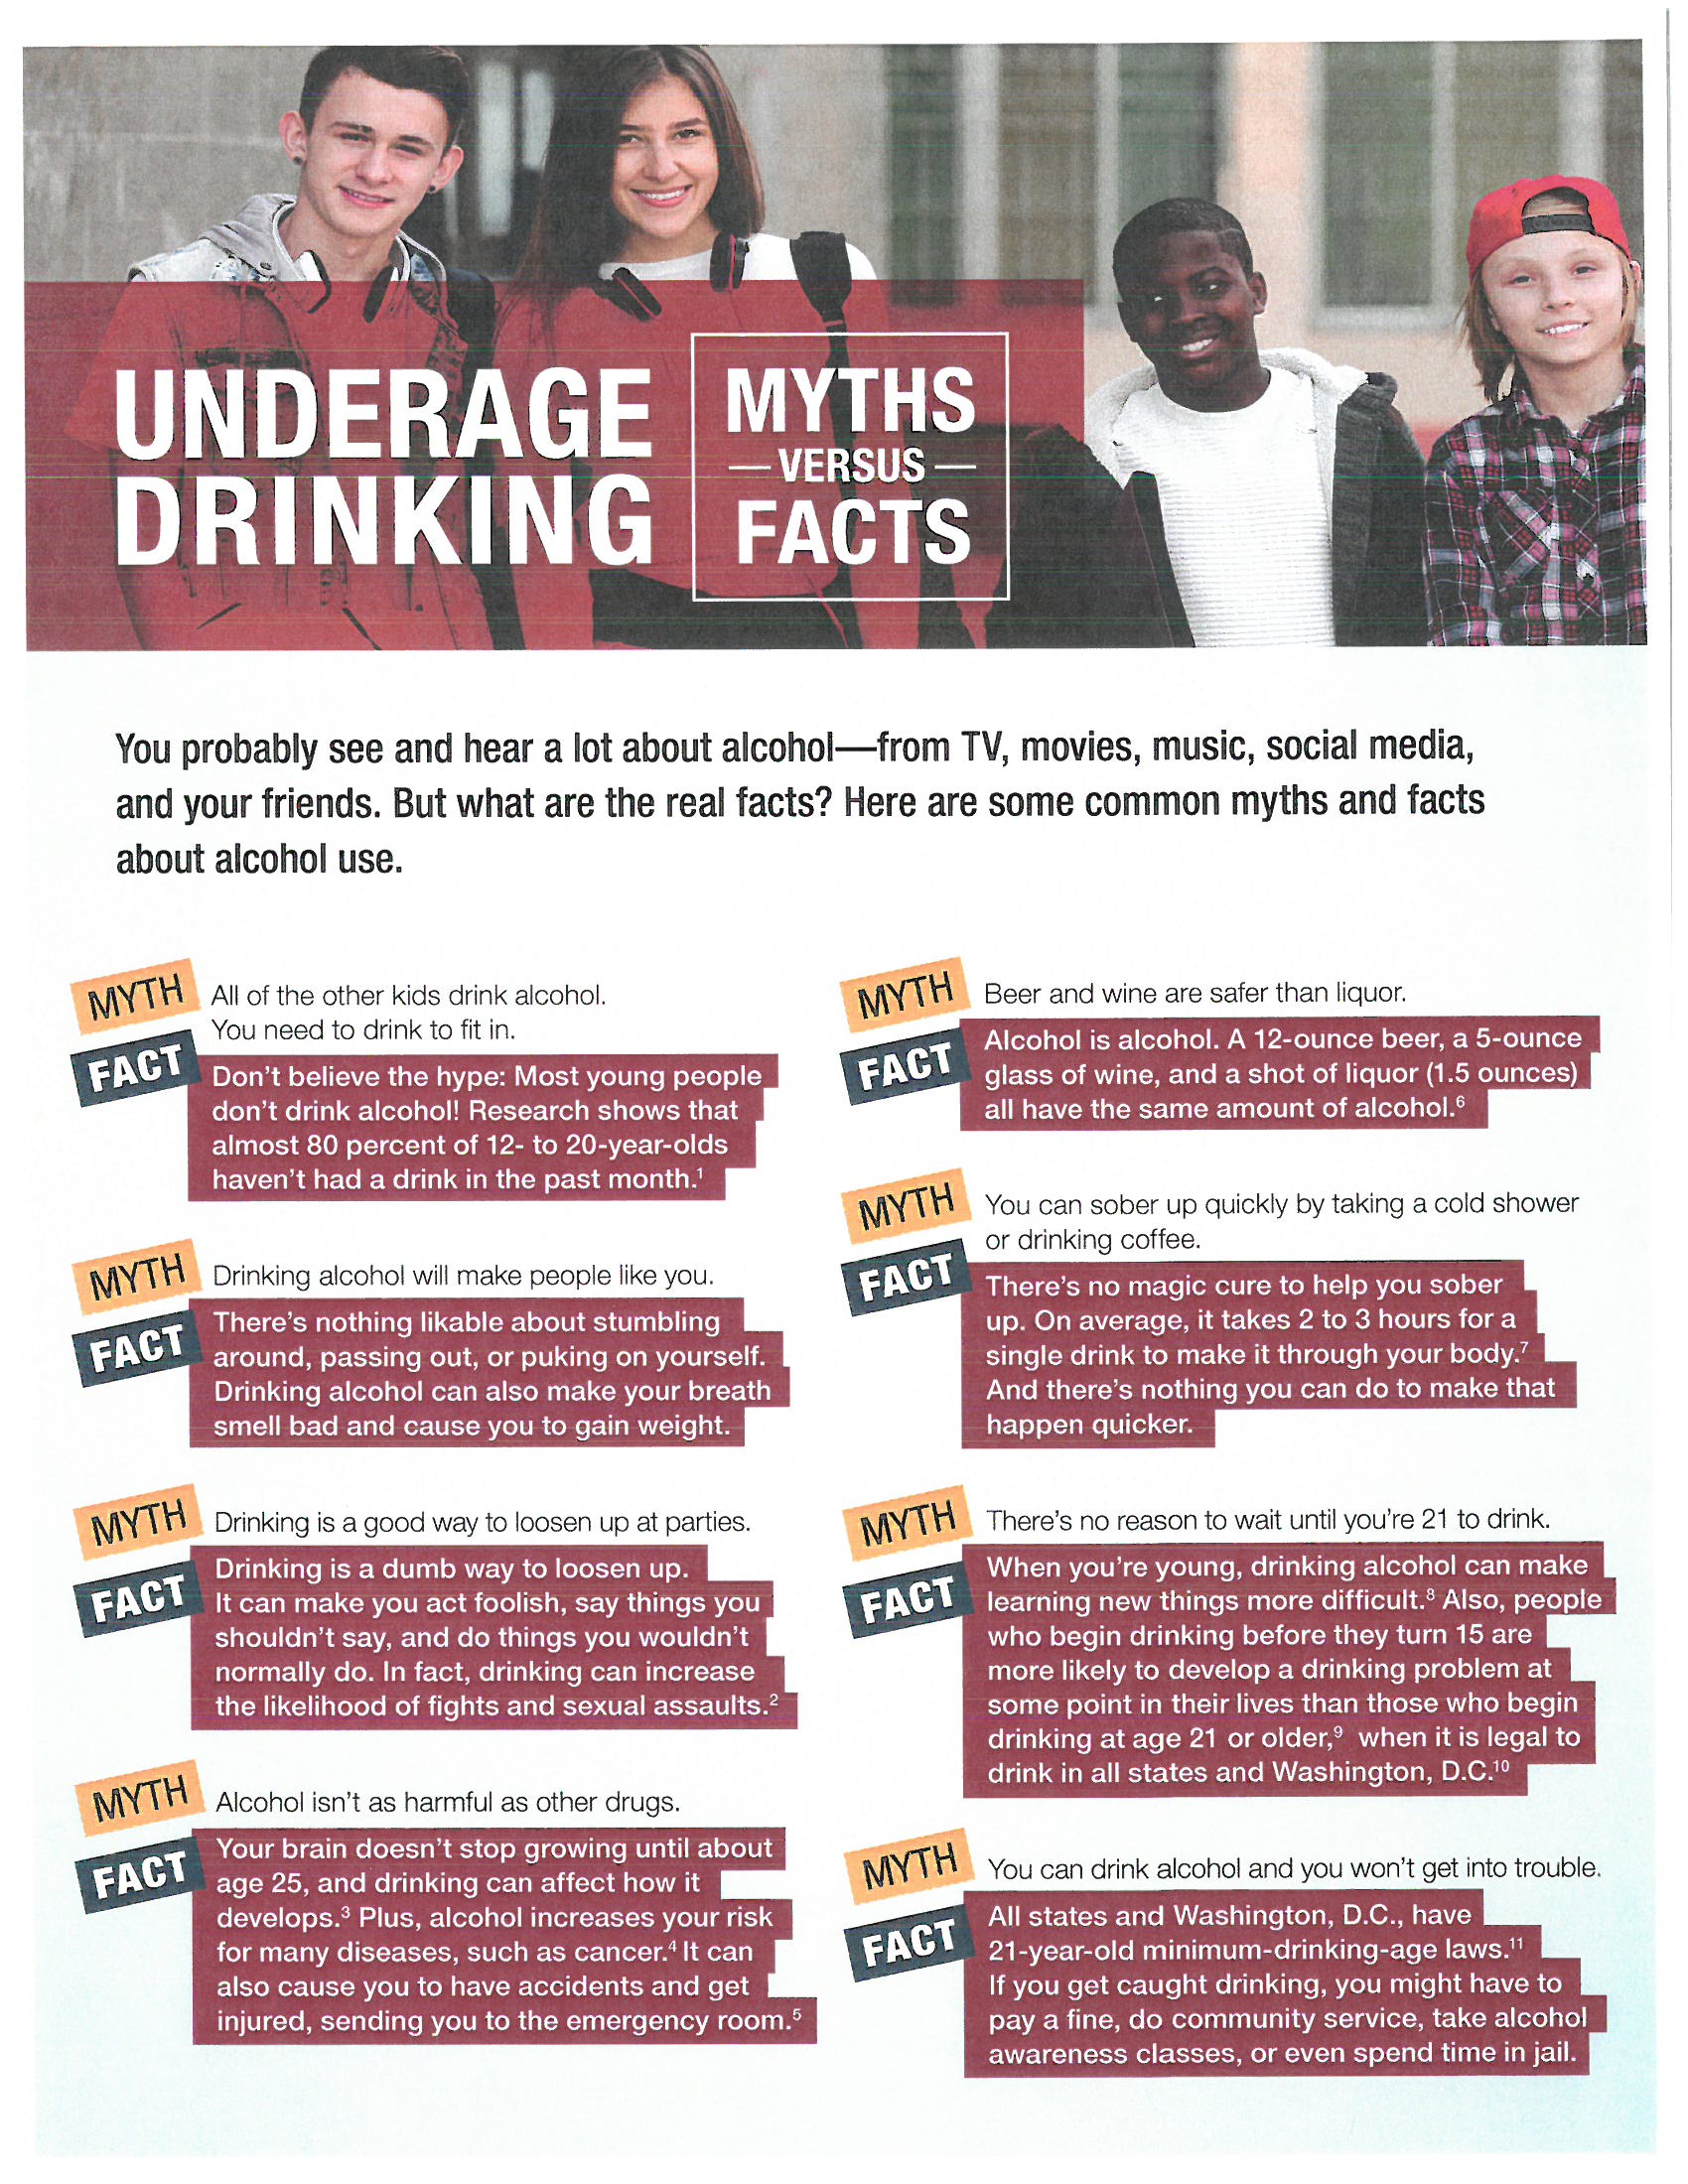 case study on underage drinking